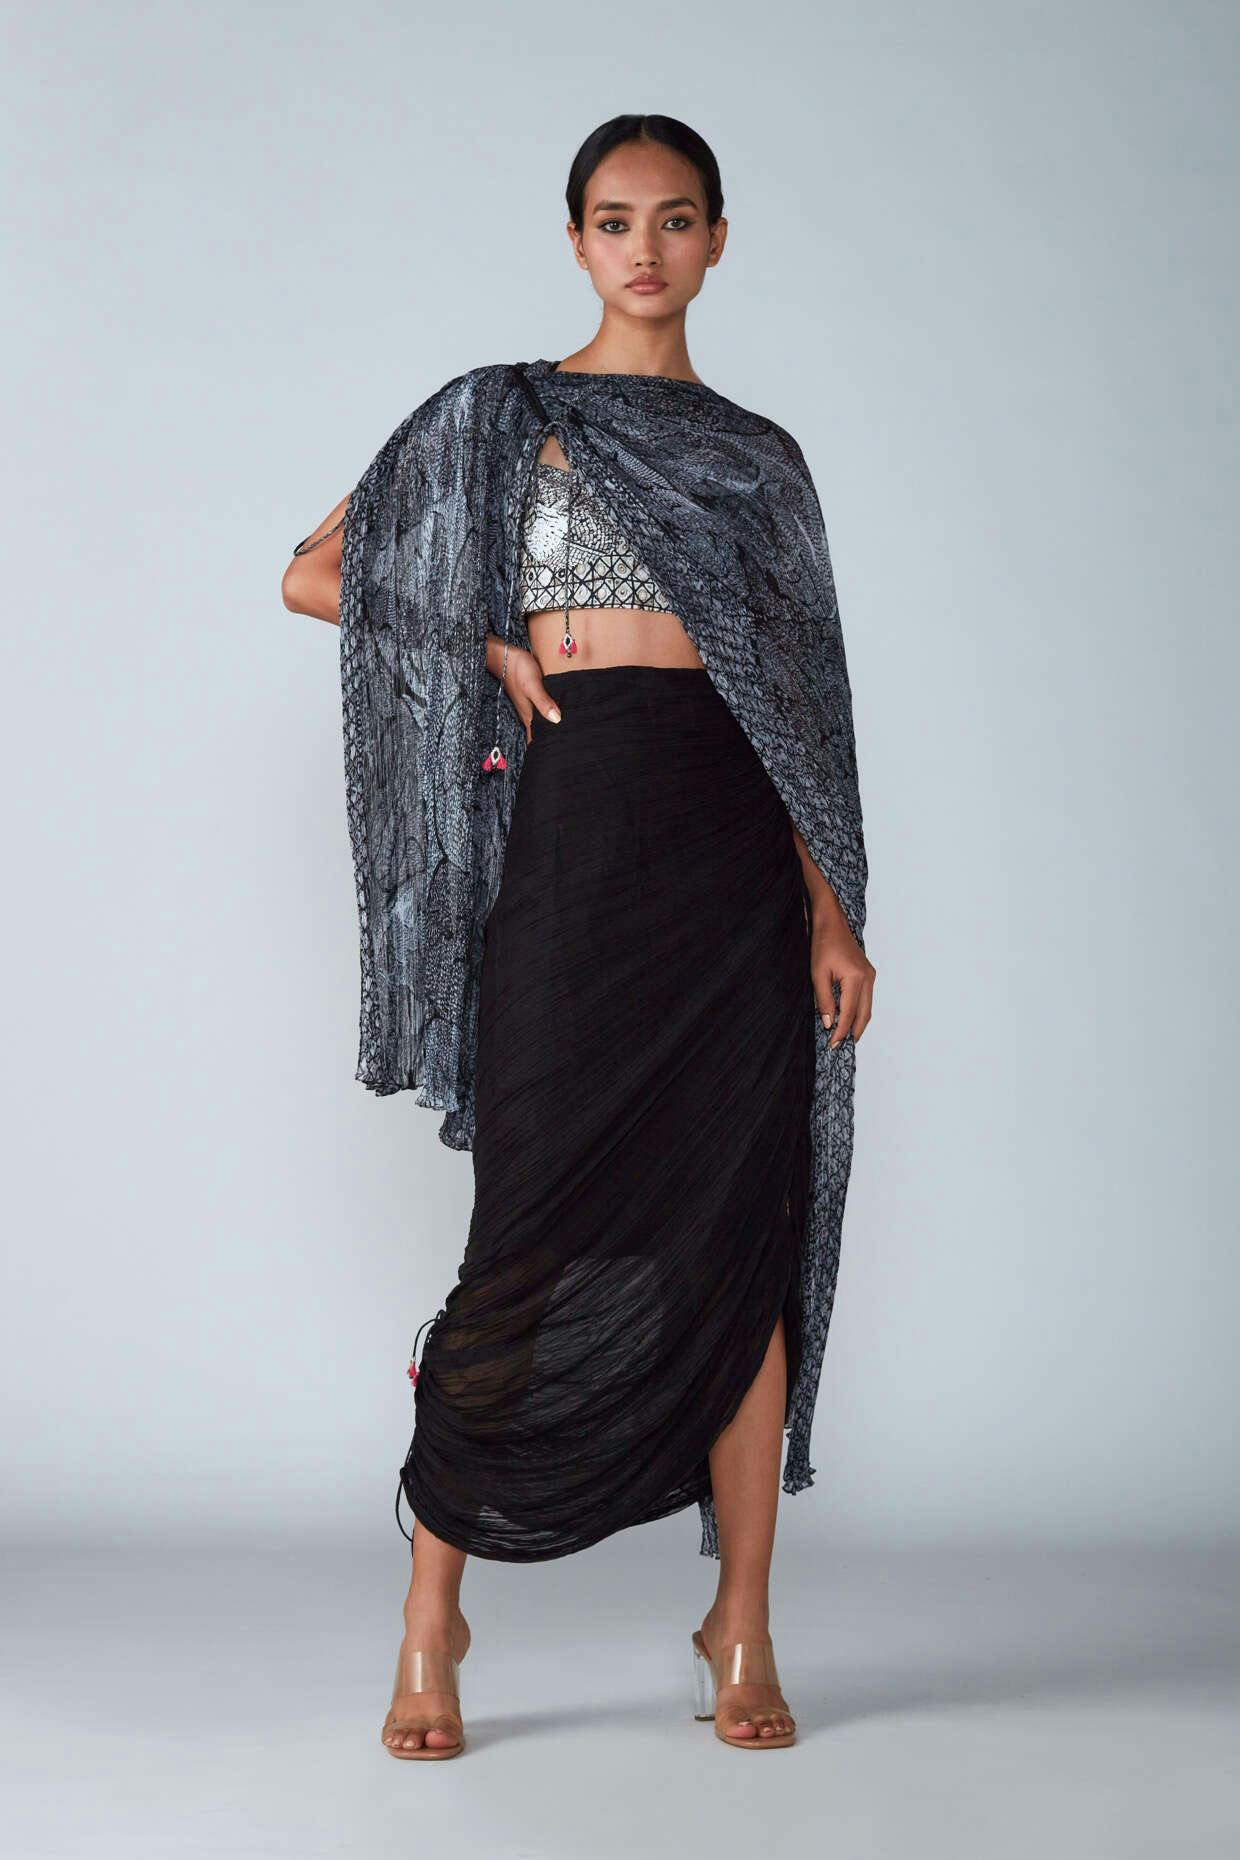 Bustier & Skirt, a product by Saaksha & Kinni 